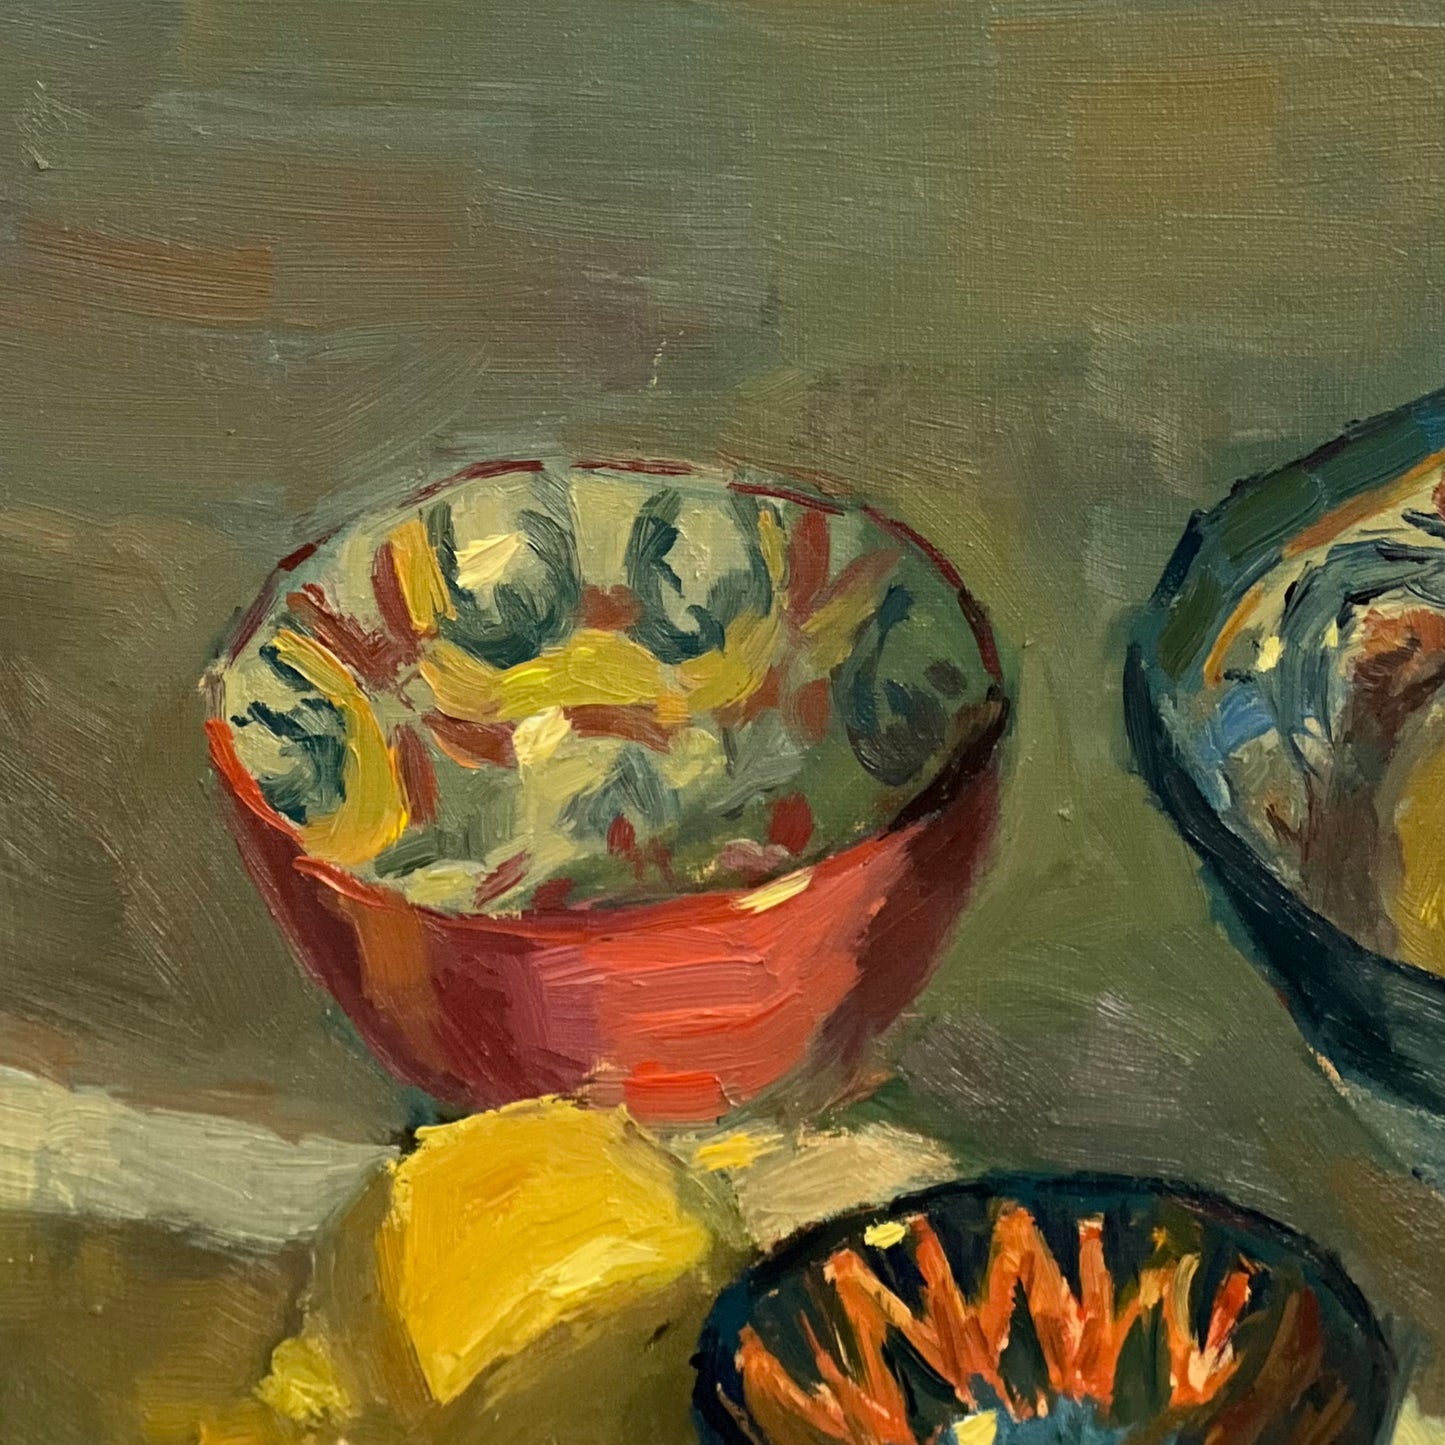 Three bowls and lemons - still life oil painting